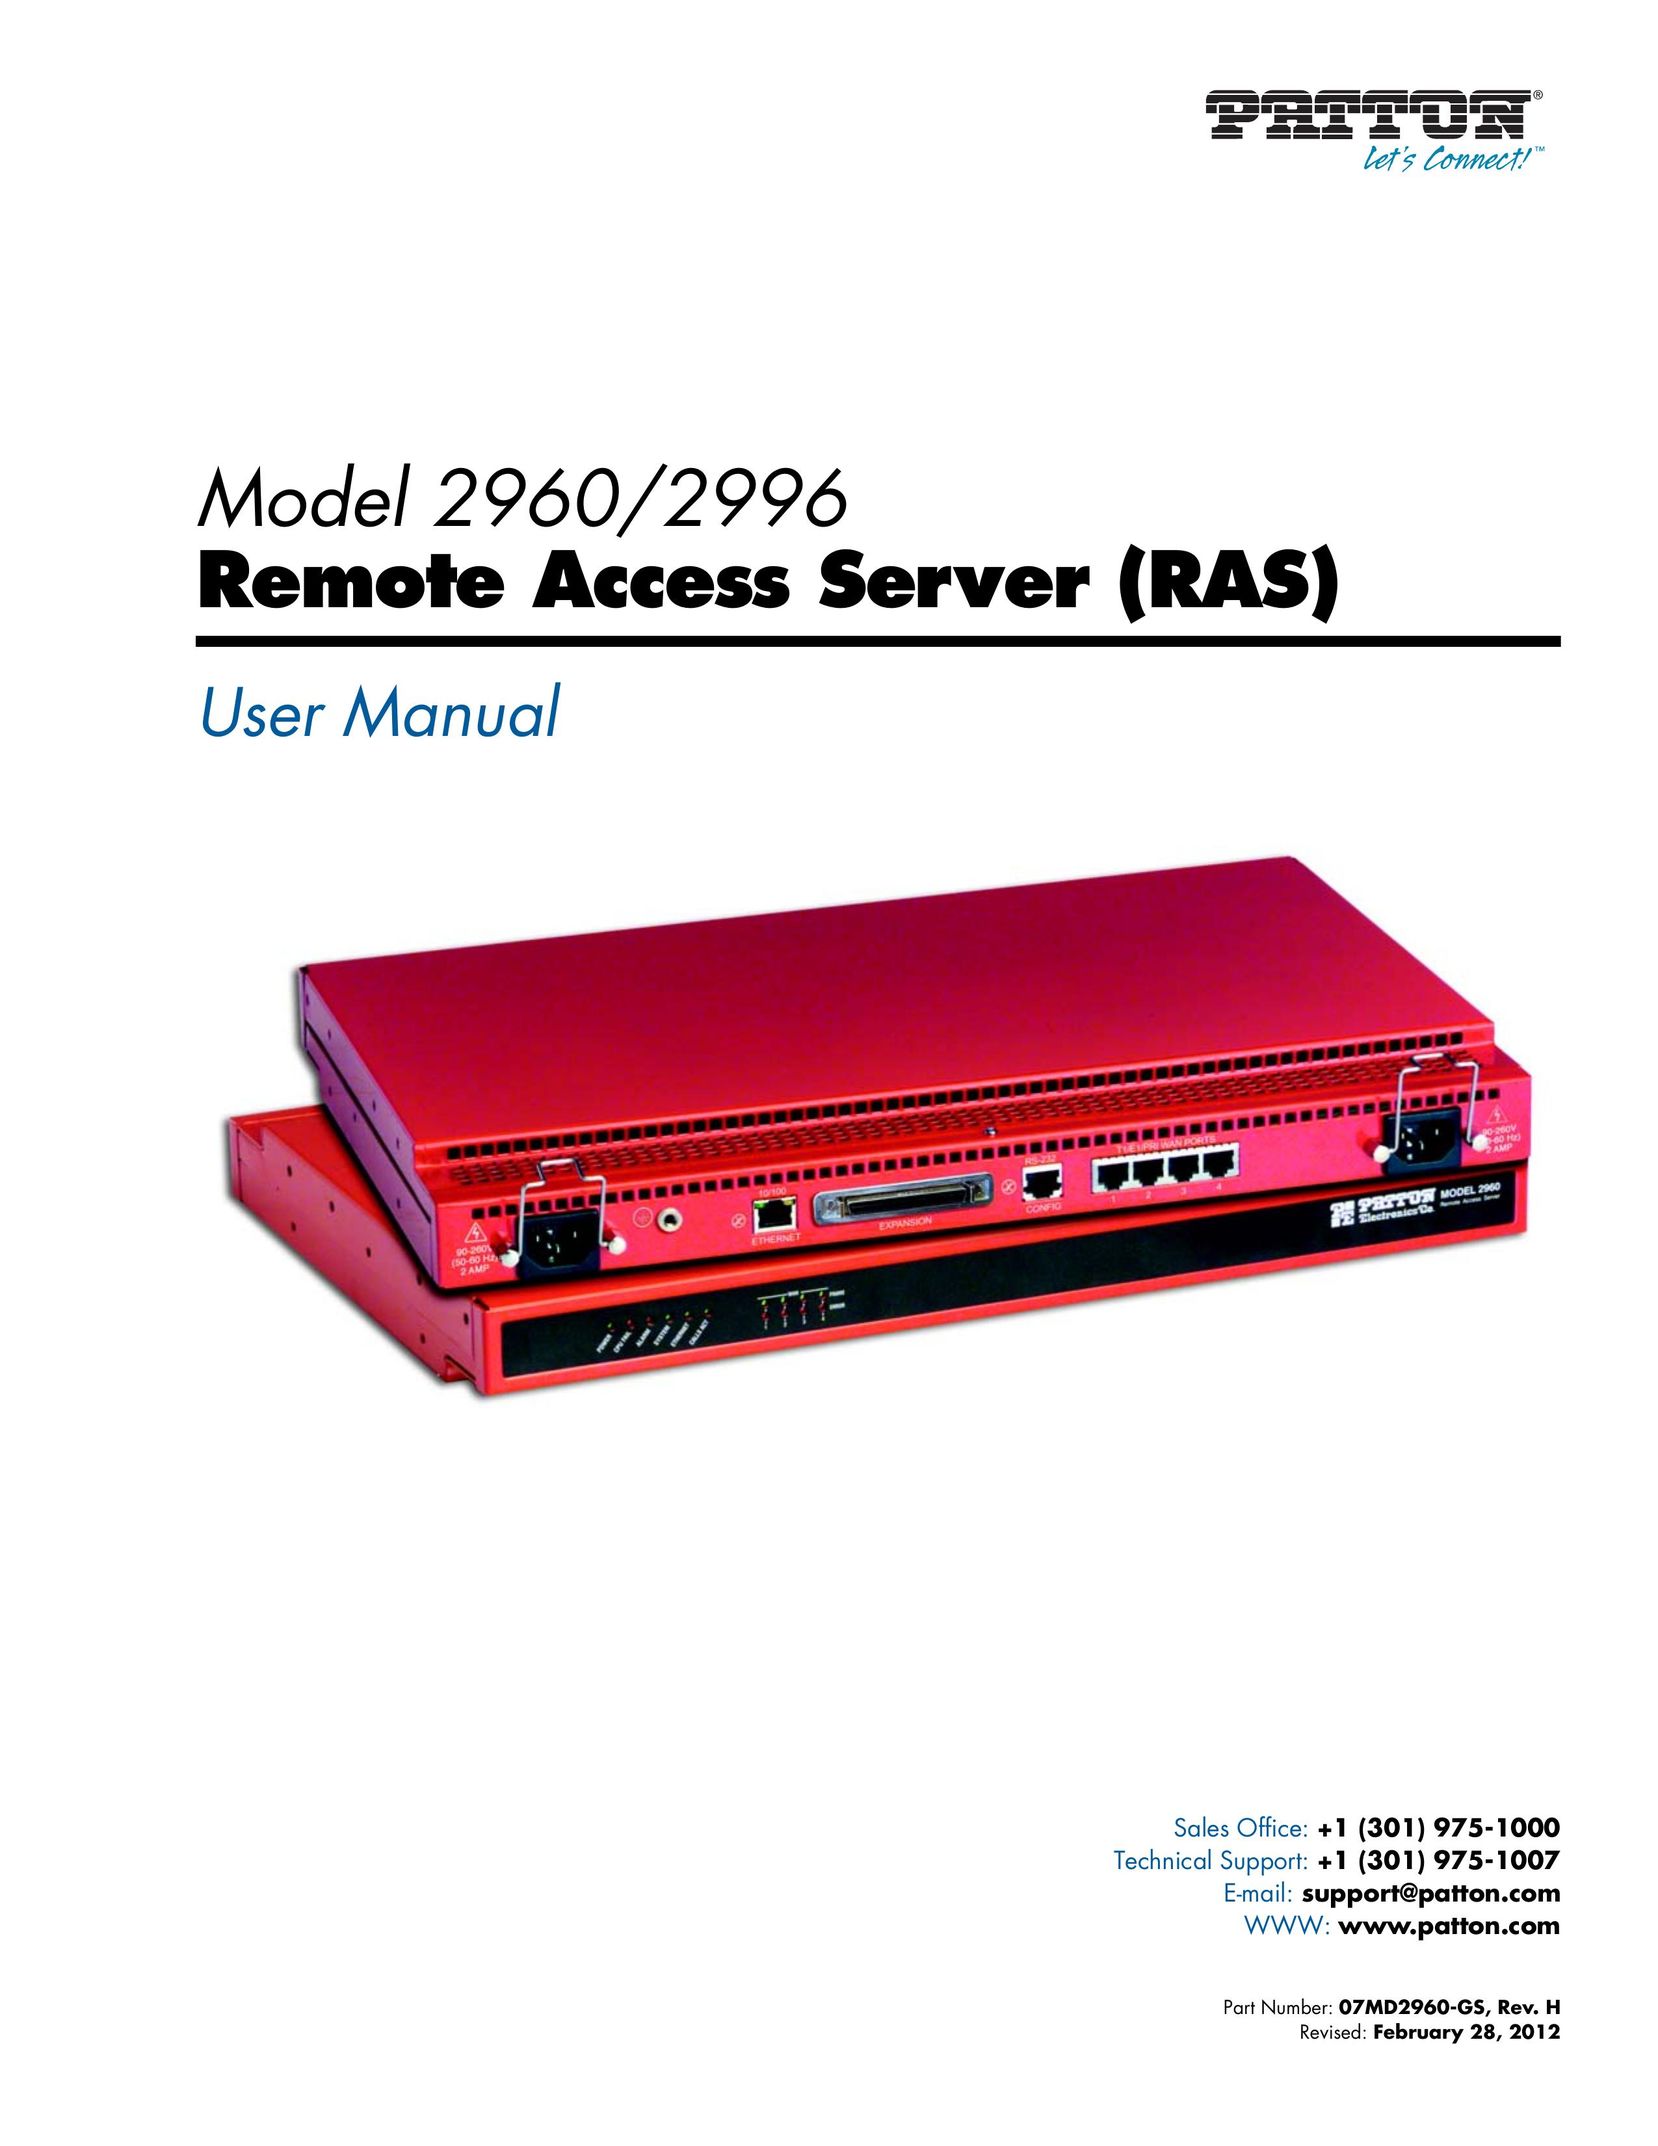 Patton electronic 2960 Server User Manual